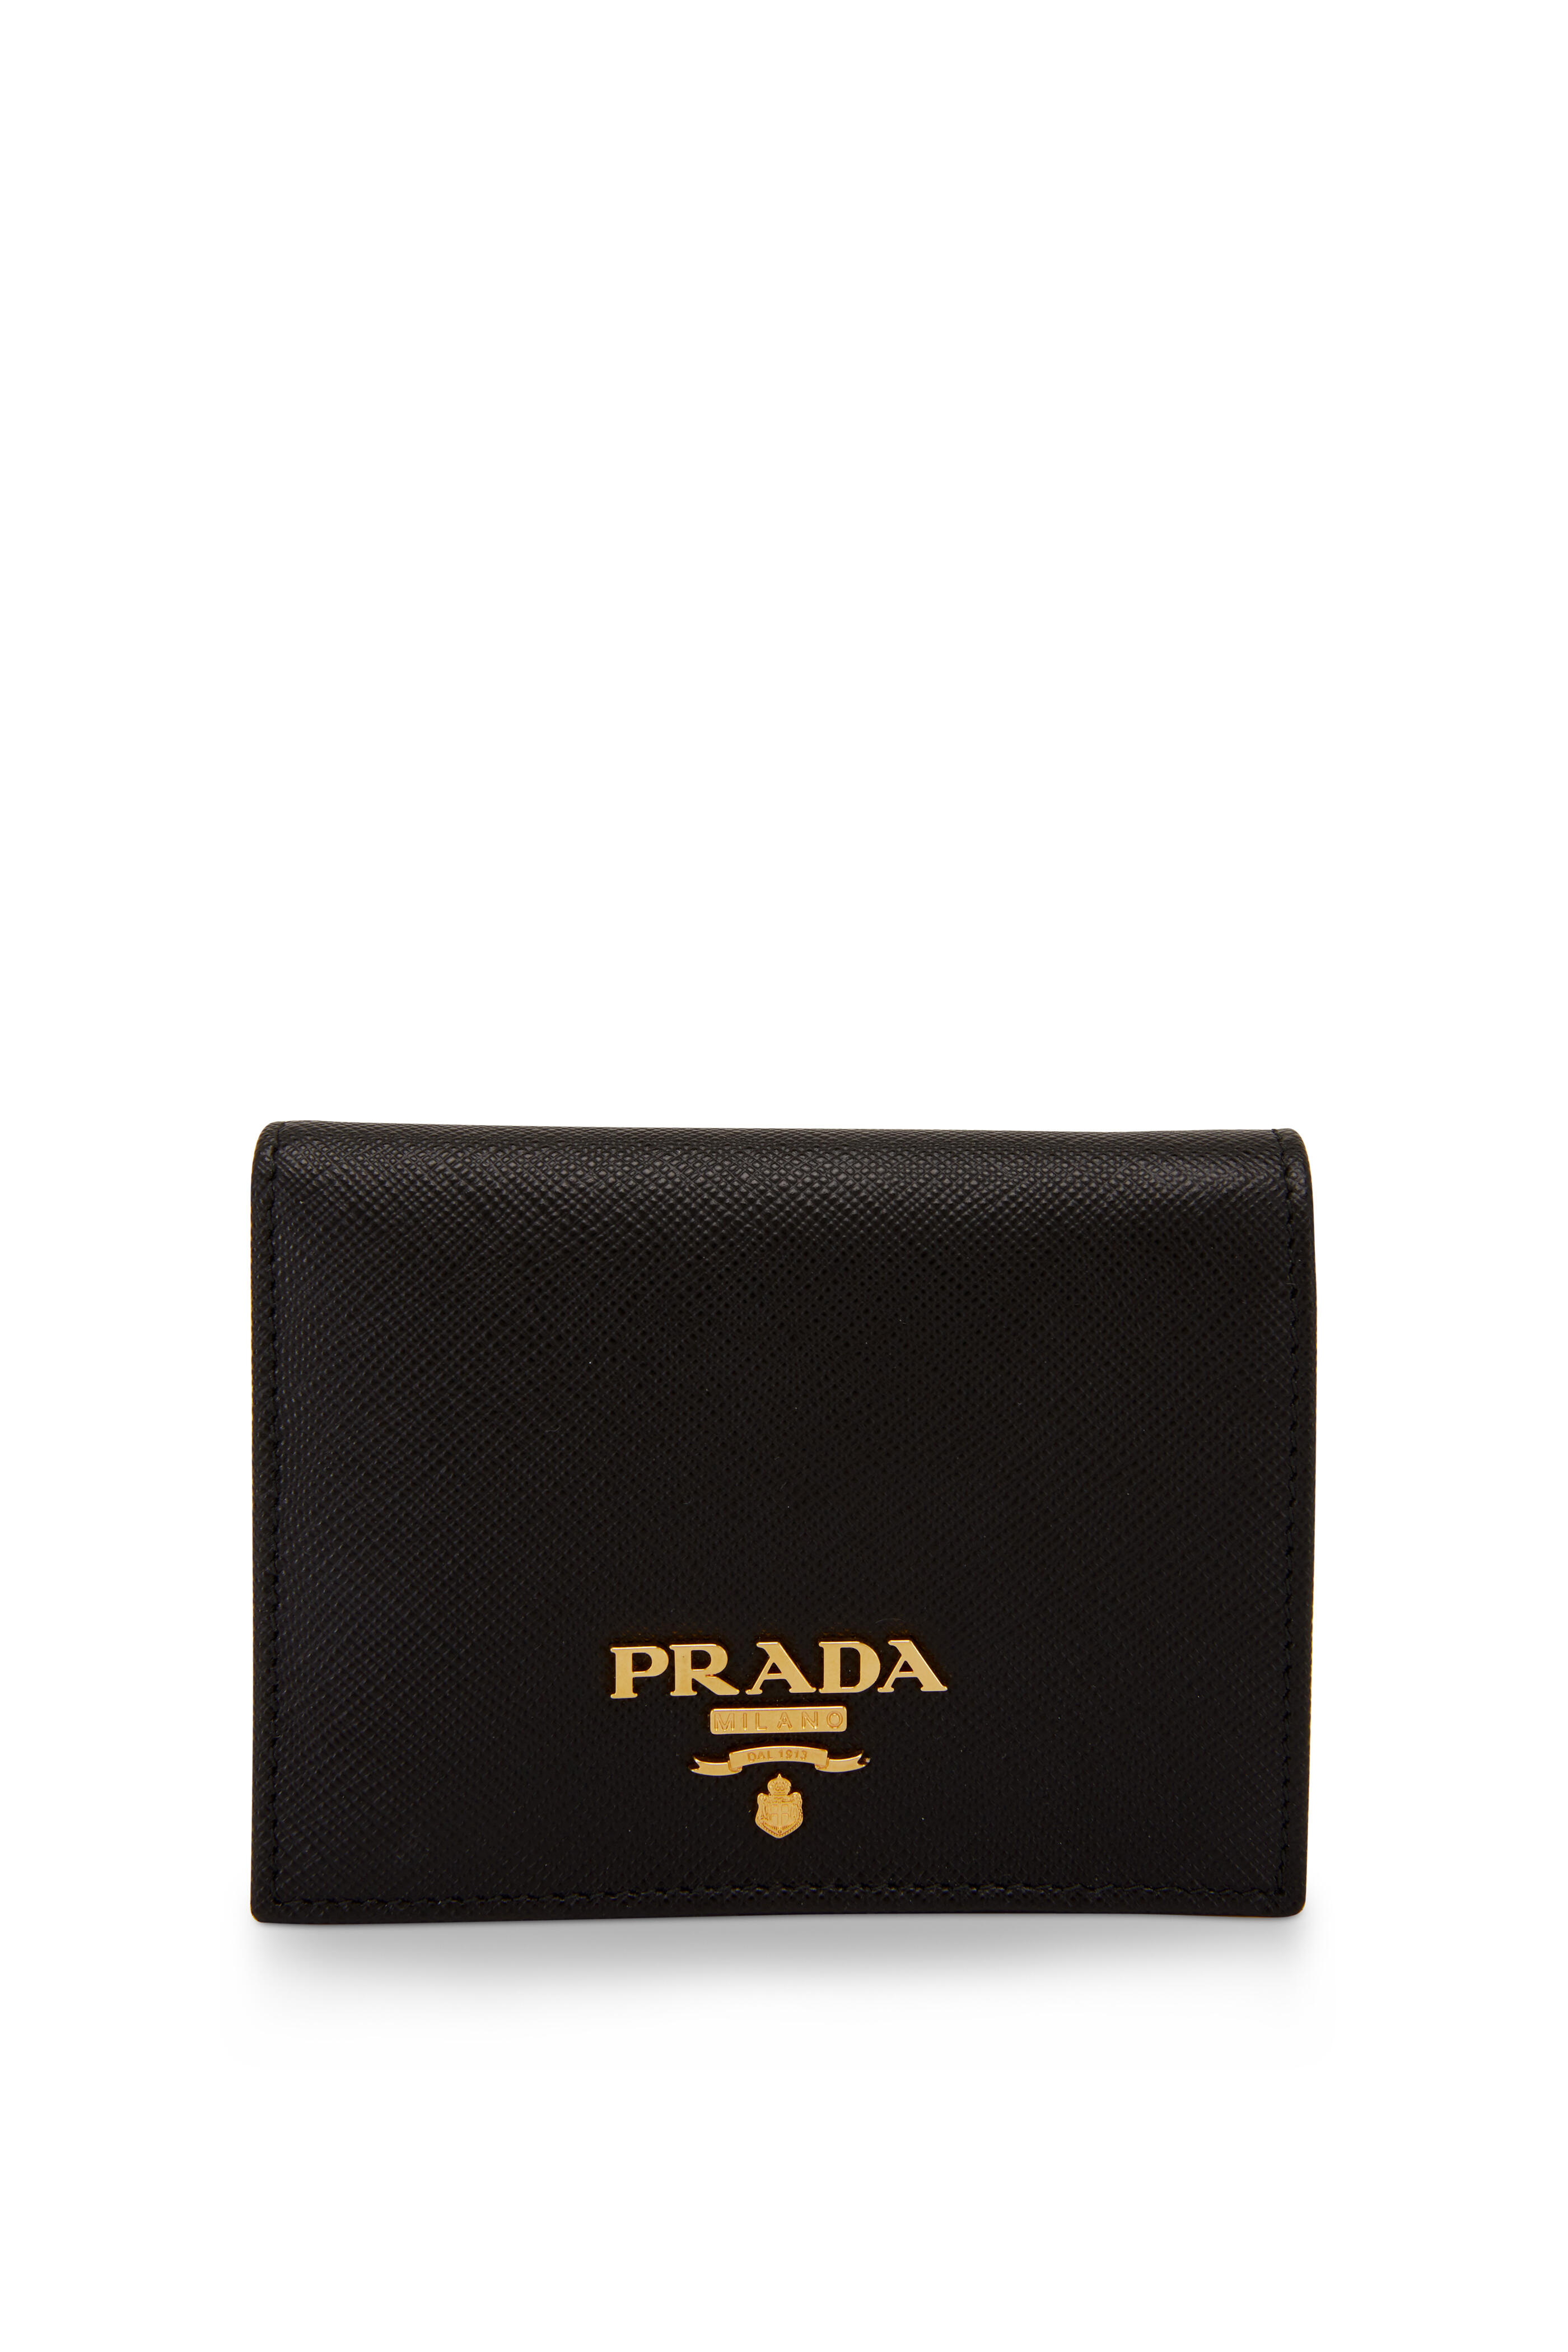 Prada - Black Leather Snap Flap Wallet | Mitchell Stores